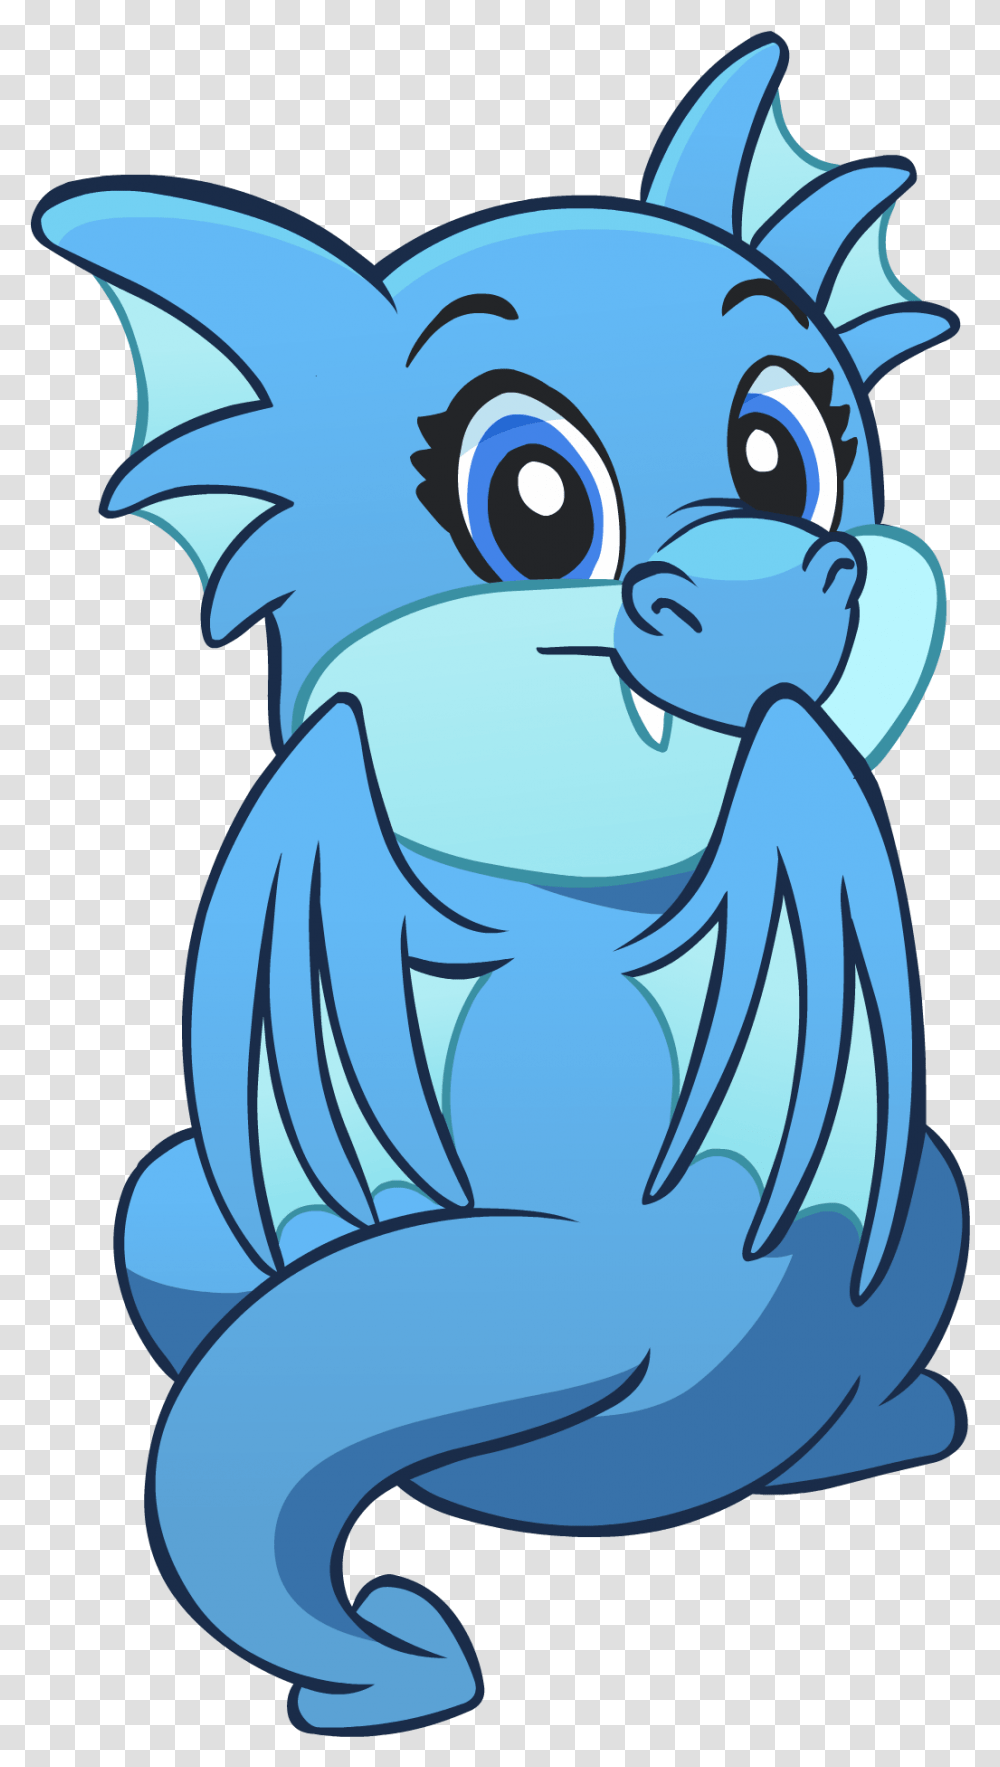 Our Mascot Isn't She Cute Creatures Blue Dragon Cartoon, Book, Comics, Painting, Animal Transparent Png